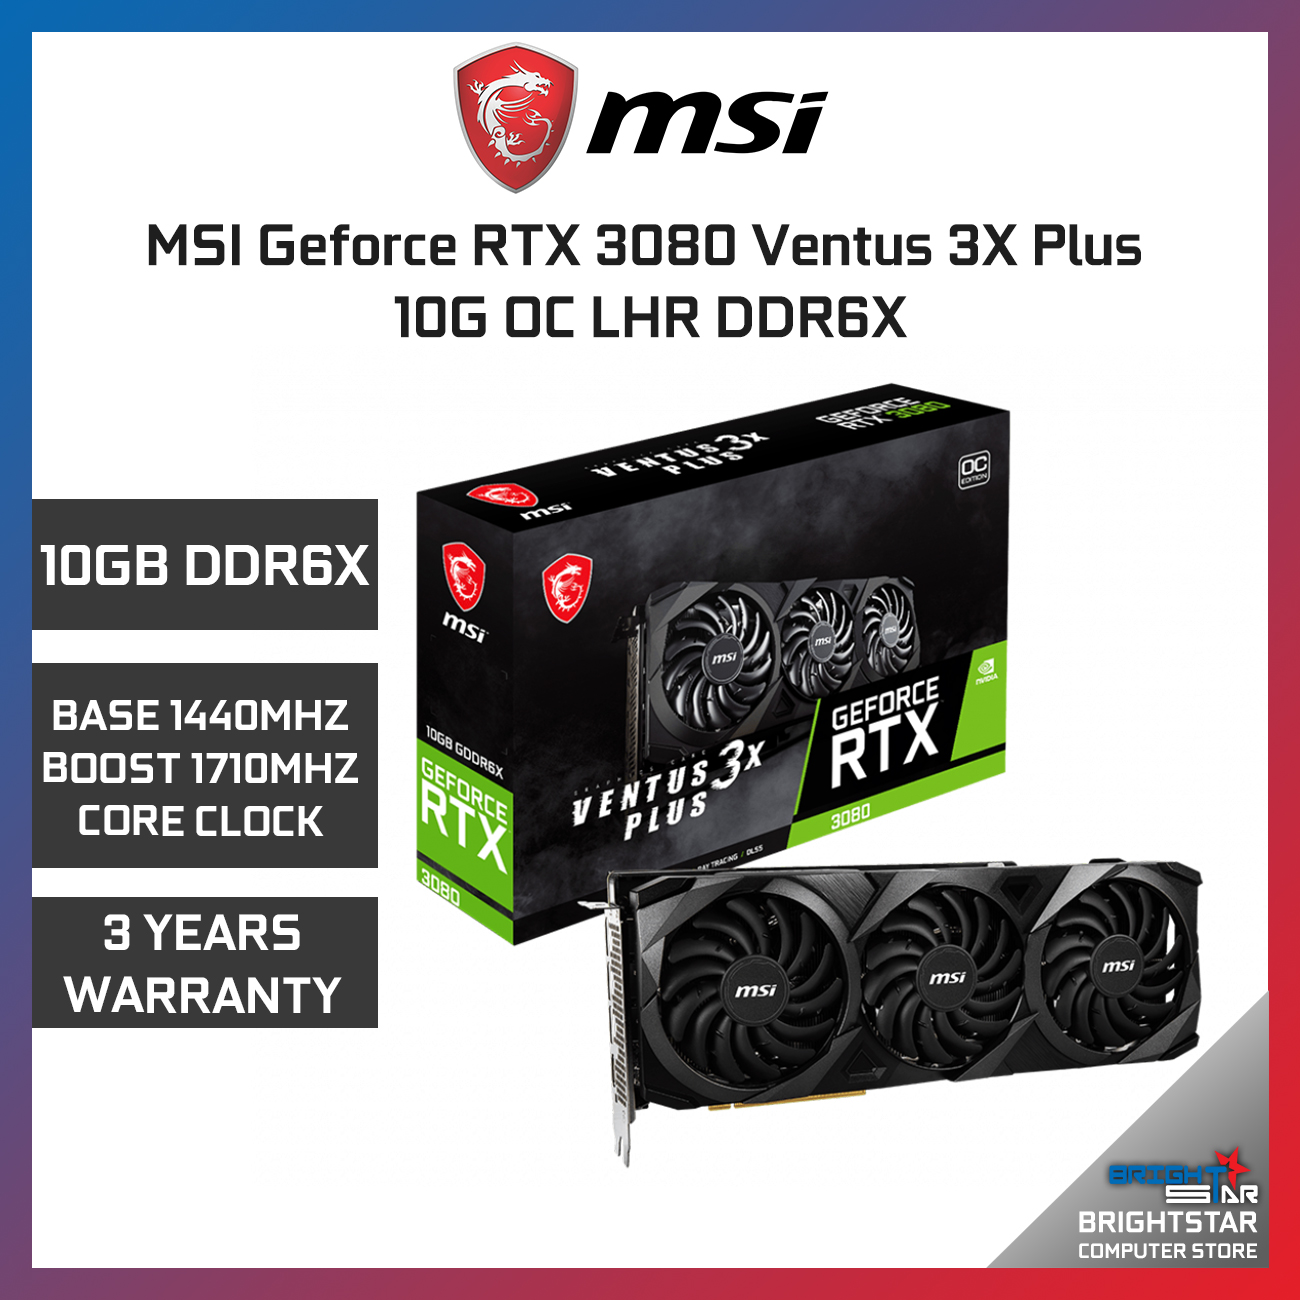 MSI Geforce RTX 3080 Ventus 3X Plus 10G OC LHR DDR6X Graphic Card ⋆  Brightstar Computer